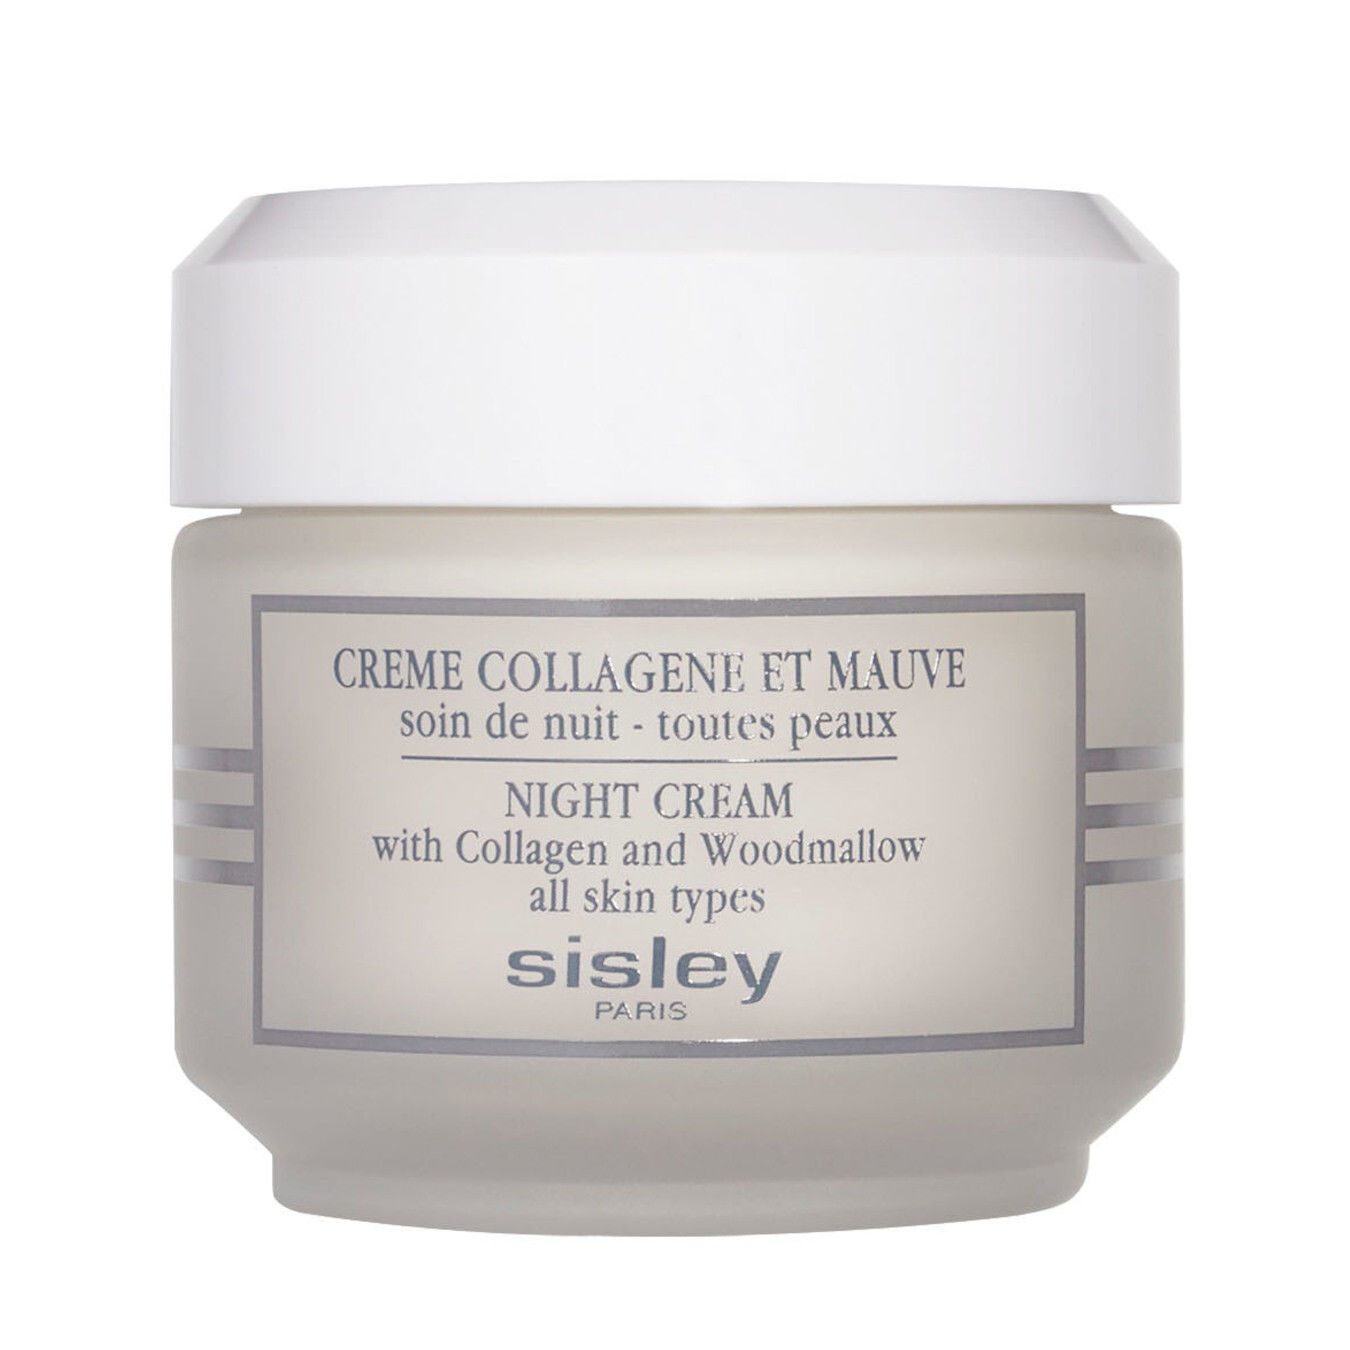 Sisley Crème Collagène et Mauve Nightcreme 50ml Damen von Sisley